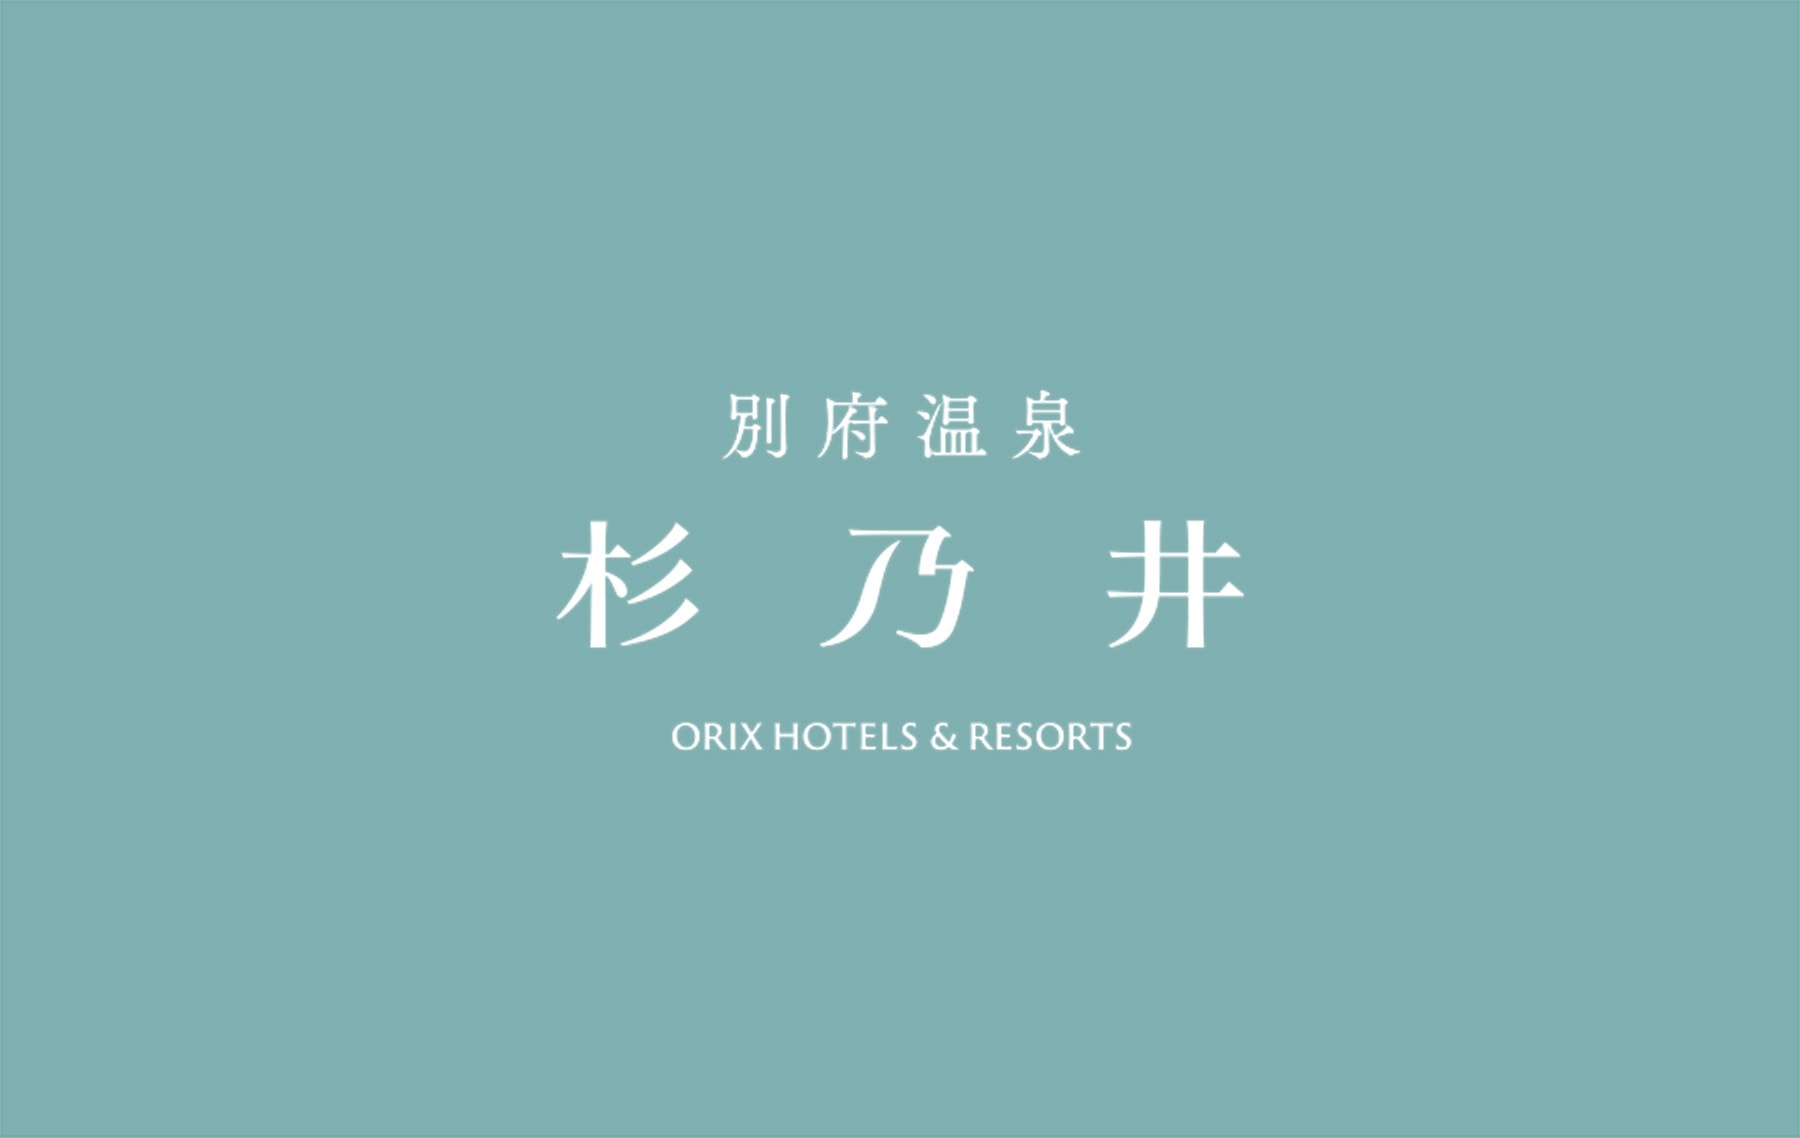 ORIX HOTELS & RESORTS、立ち上げから 3 年を経て、ブランドポートフォリオを拡充し、新たなステージへ